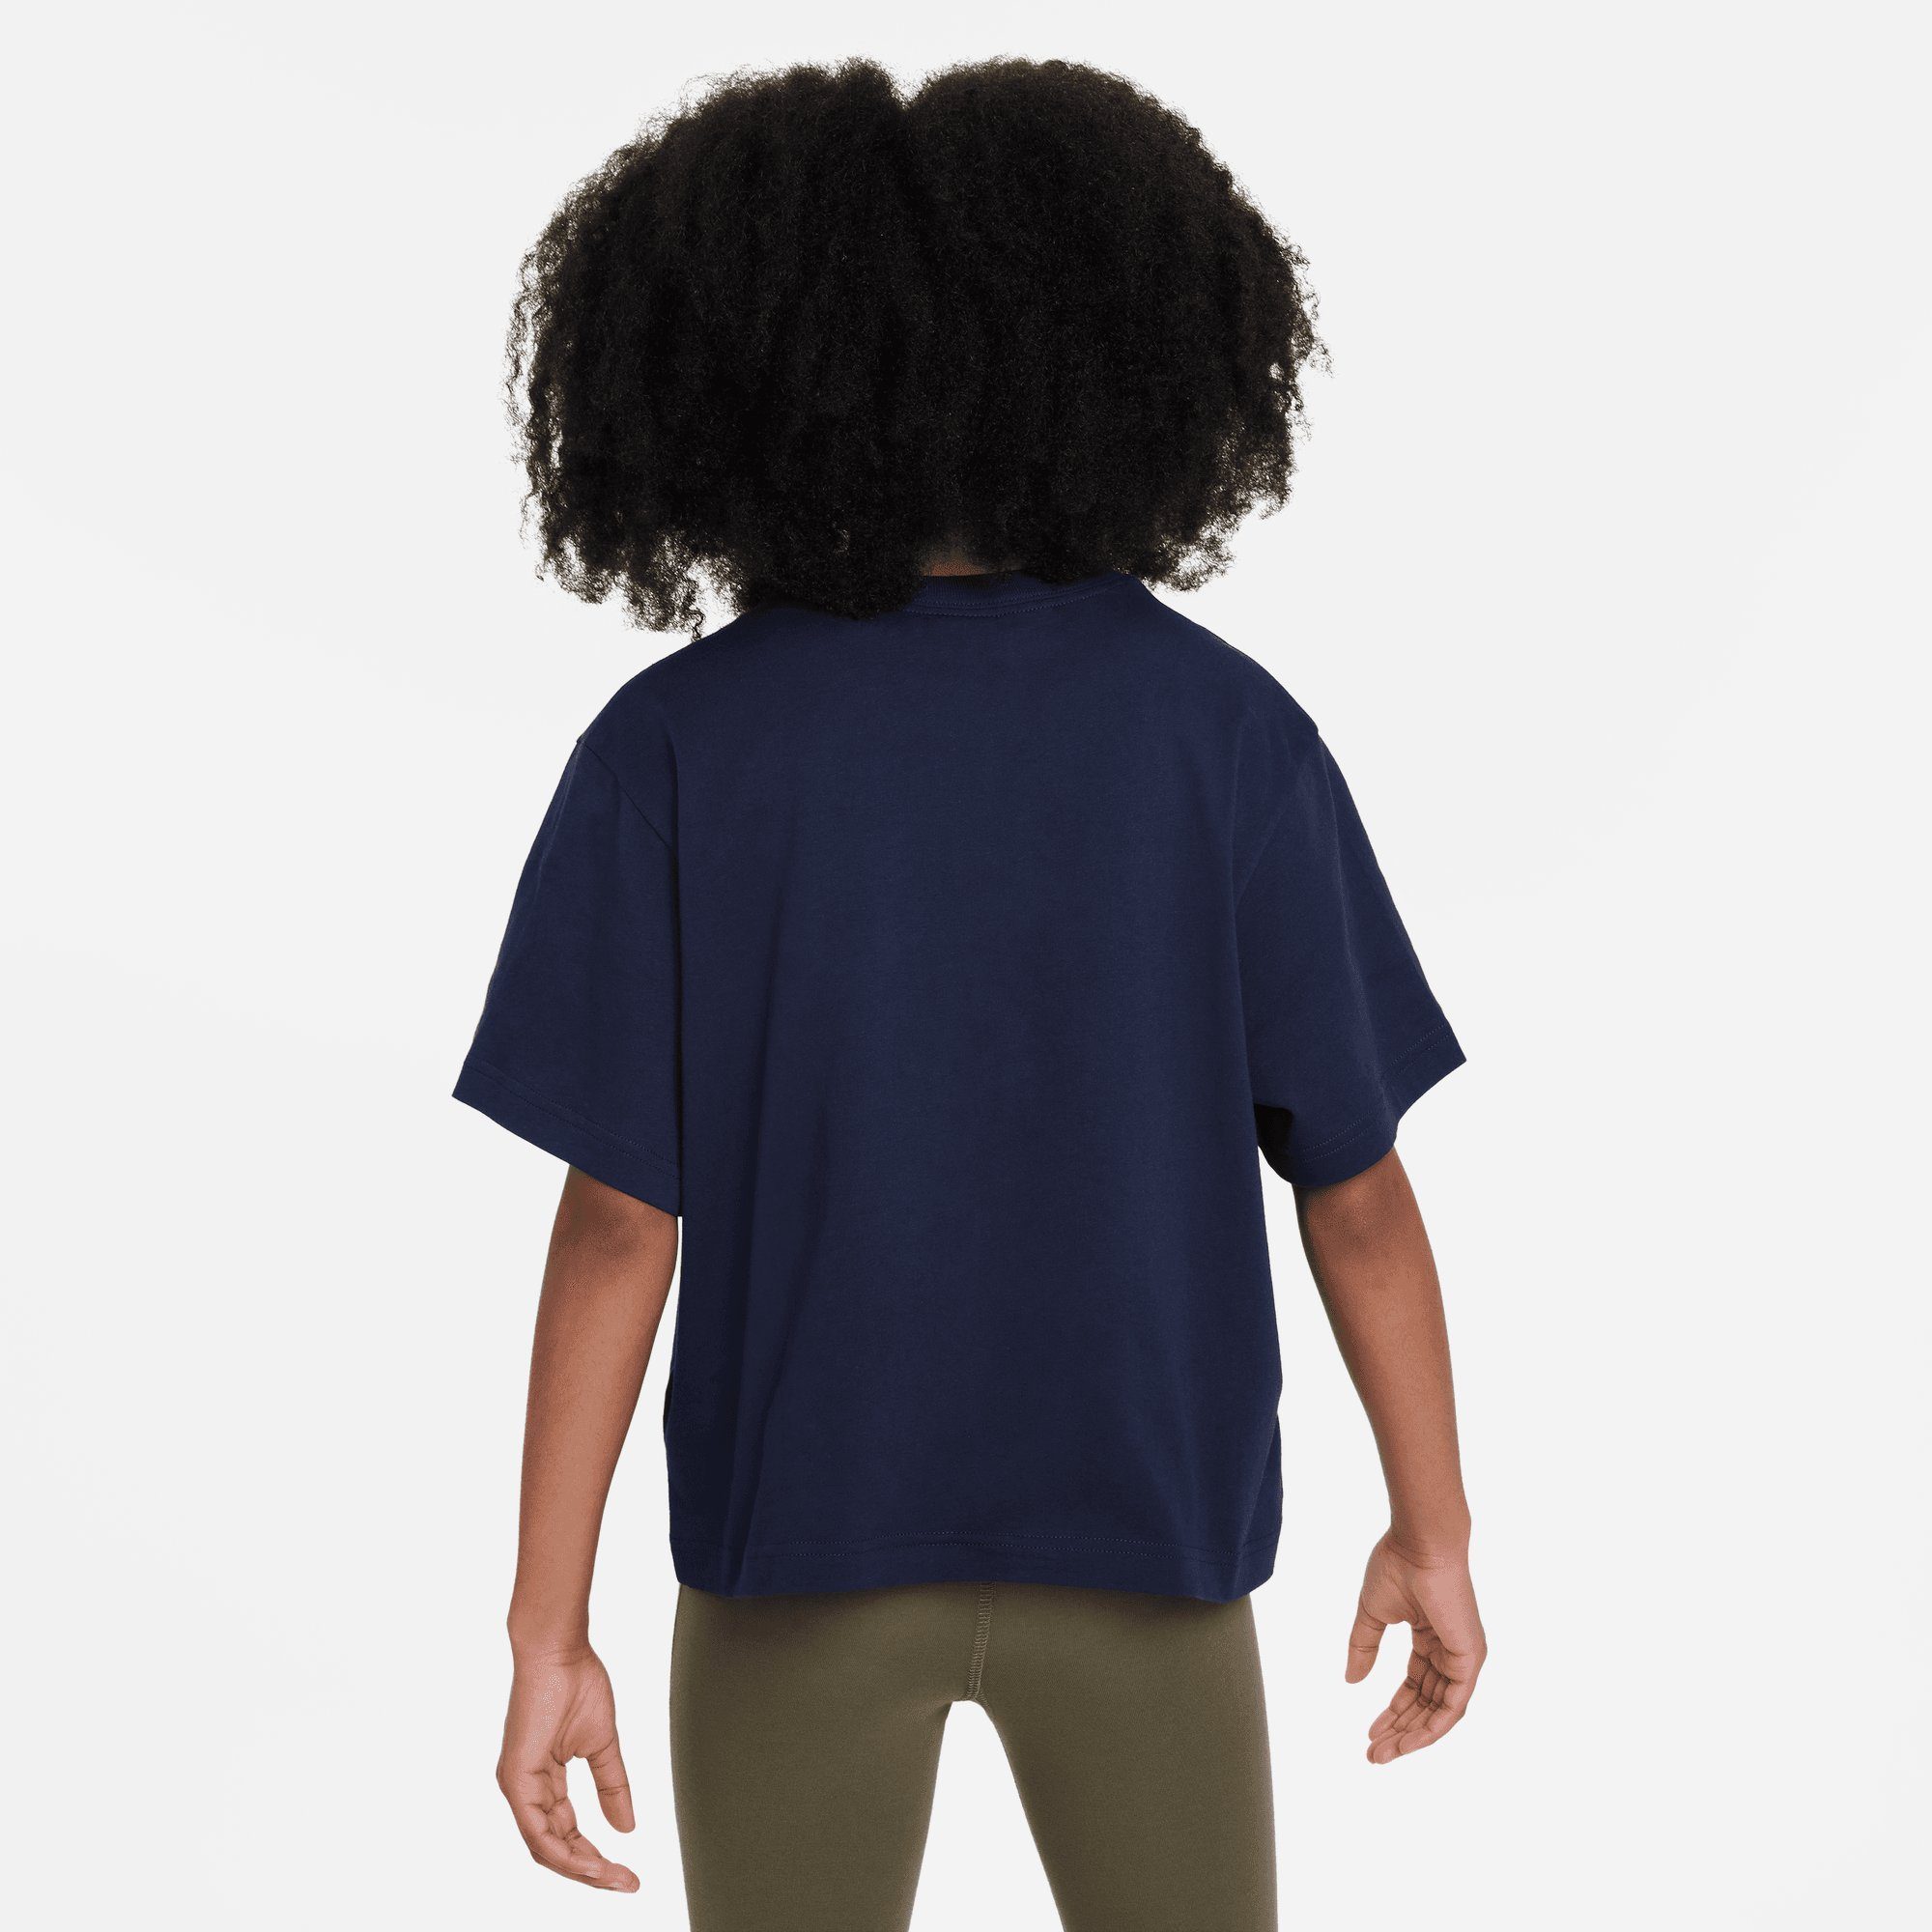 Nike Sportswear T-Shirt G NSW Sleeve für BOXY PRNT OBSIDIAN Kinder - TEE Short